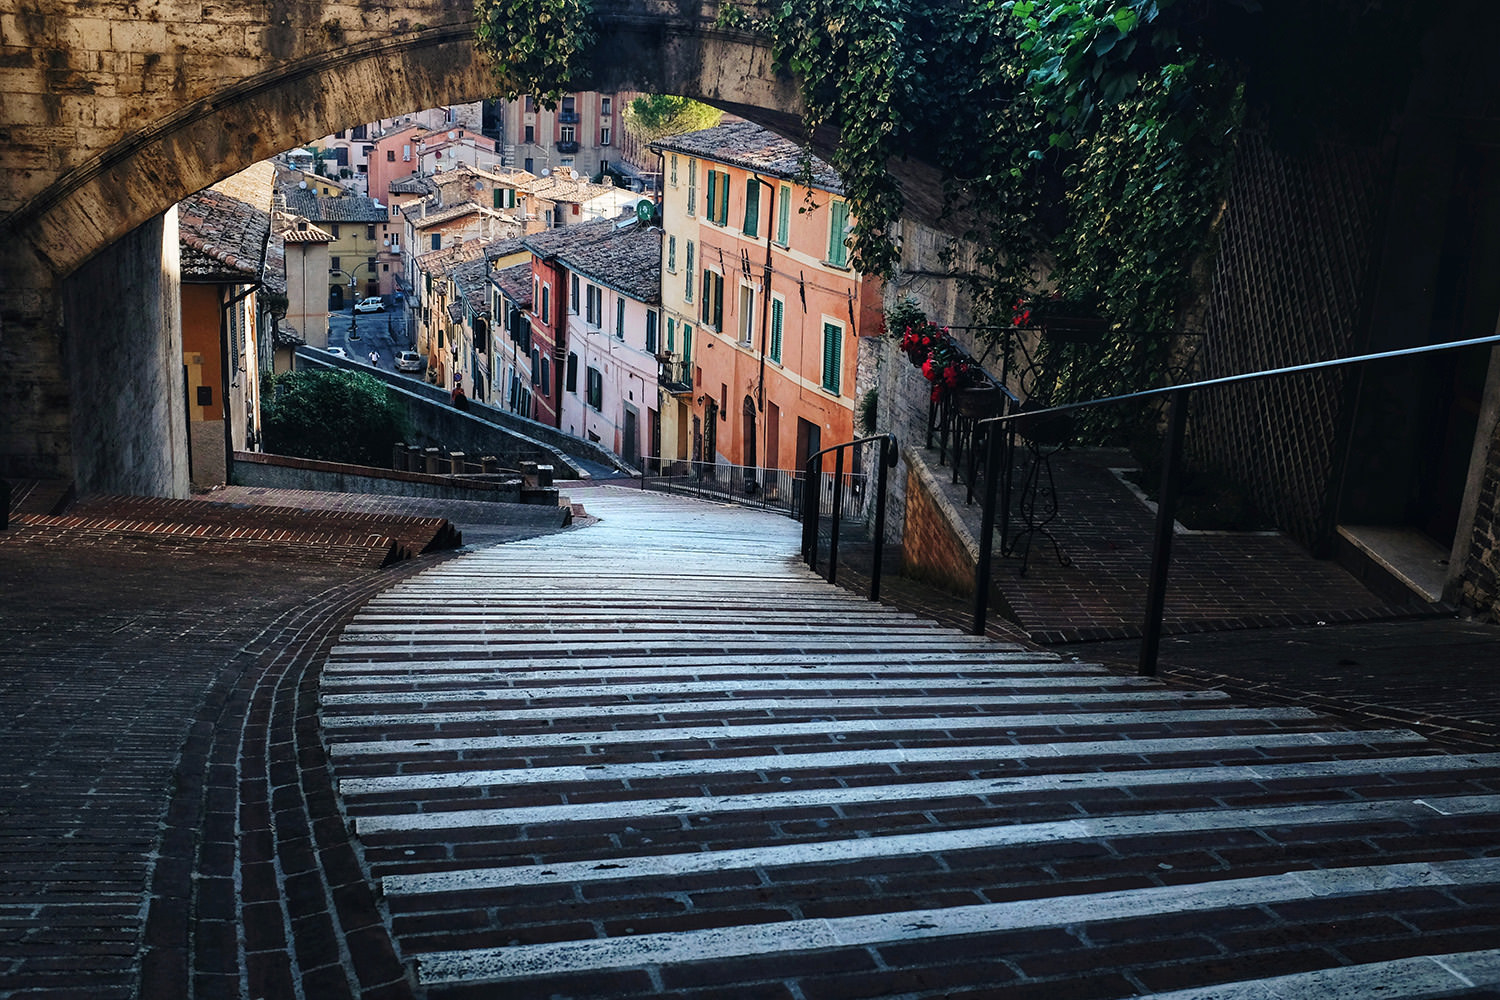 A steep, winding road under a bridge in Perugia